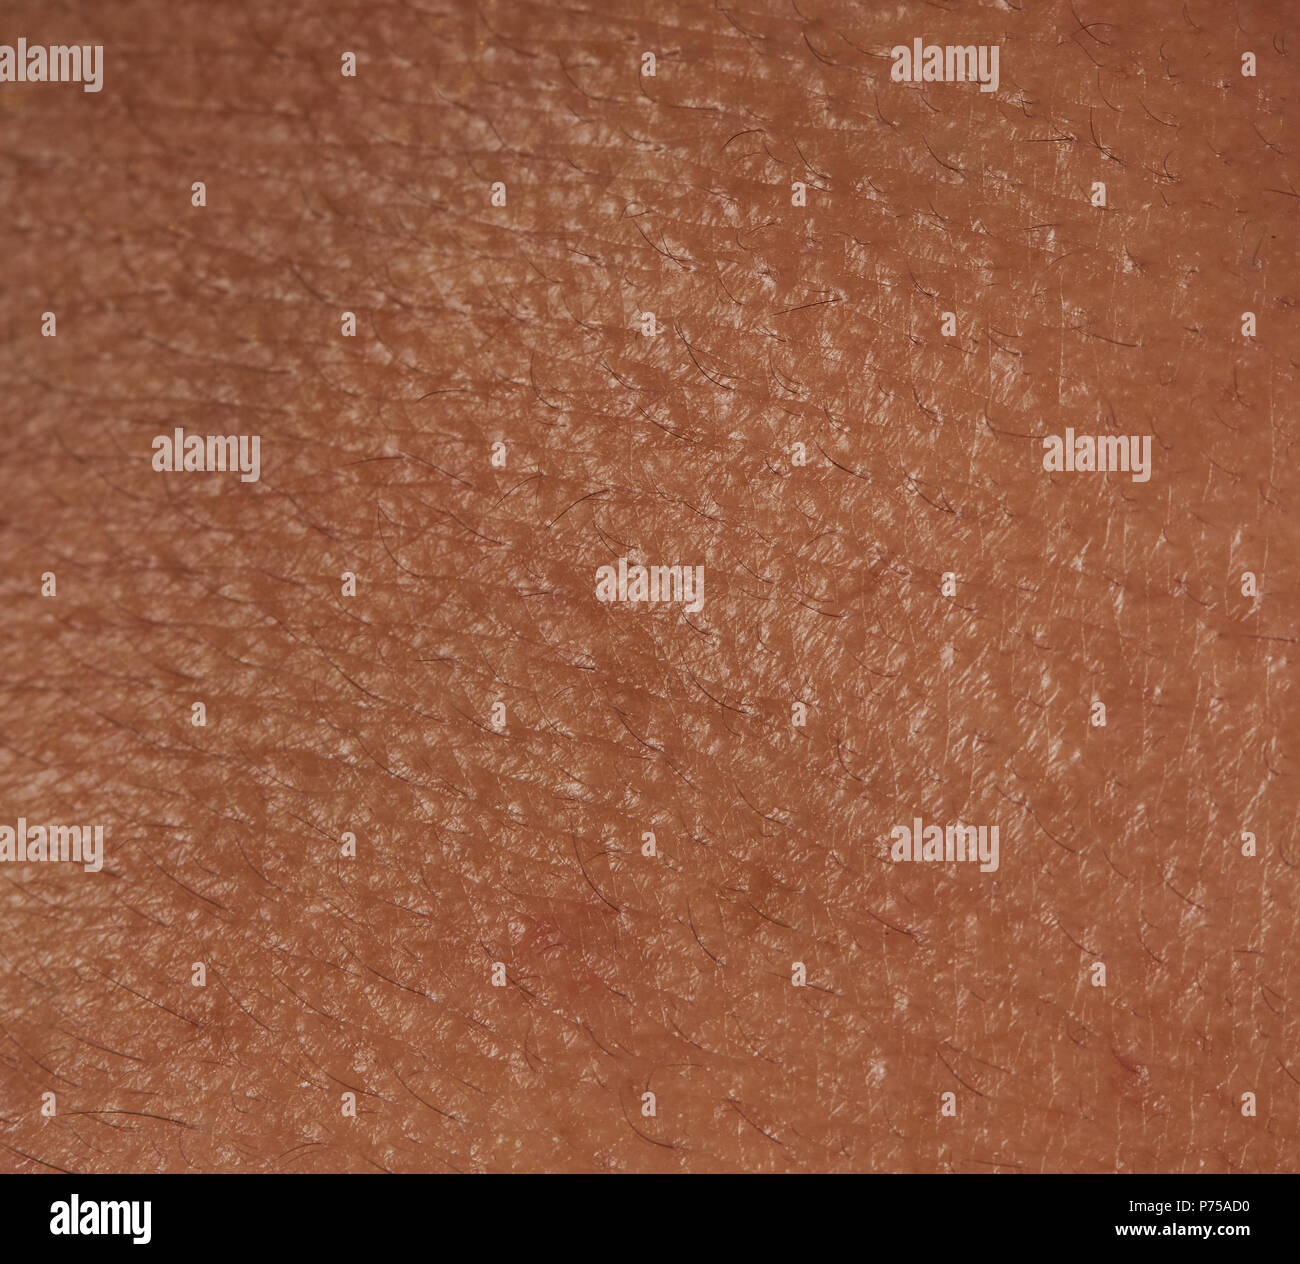 Human skin texture close-up view. Dark brown skin surface Stock Photo